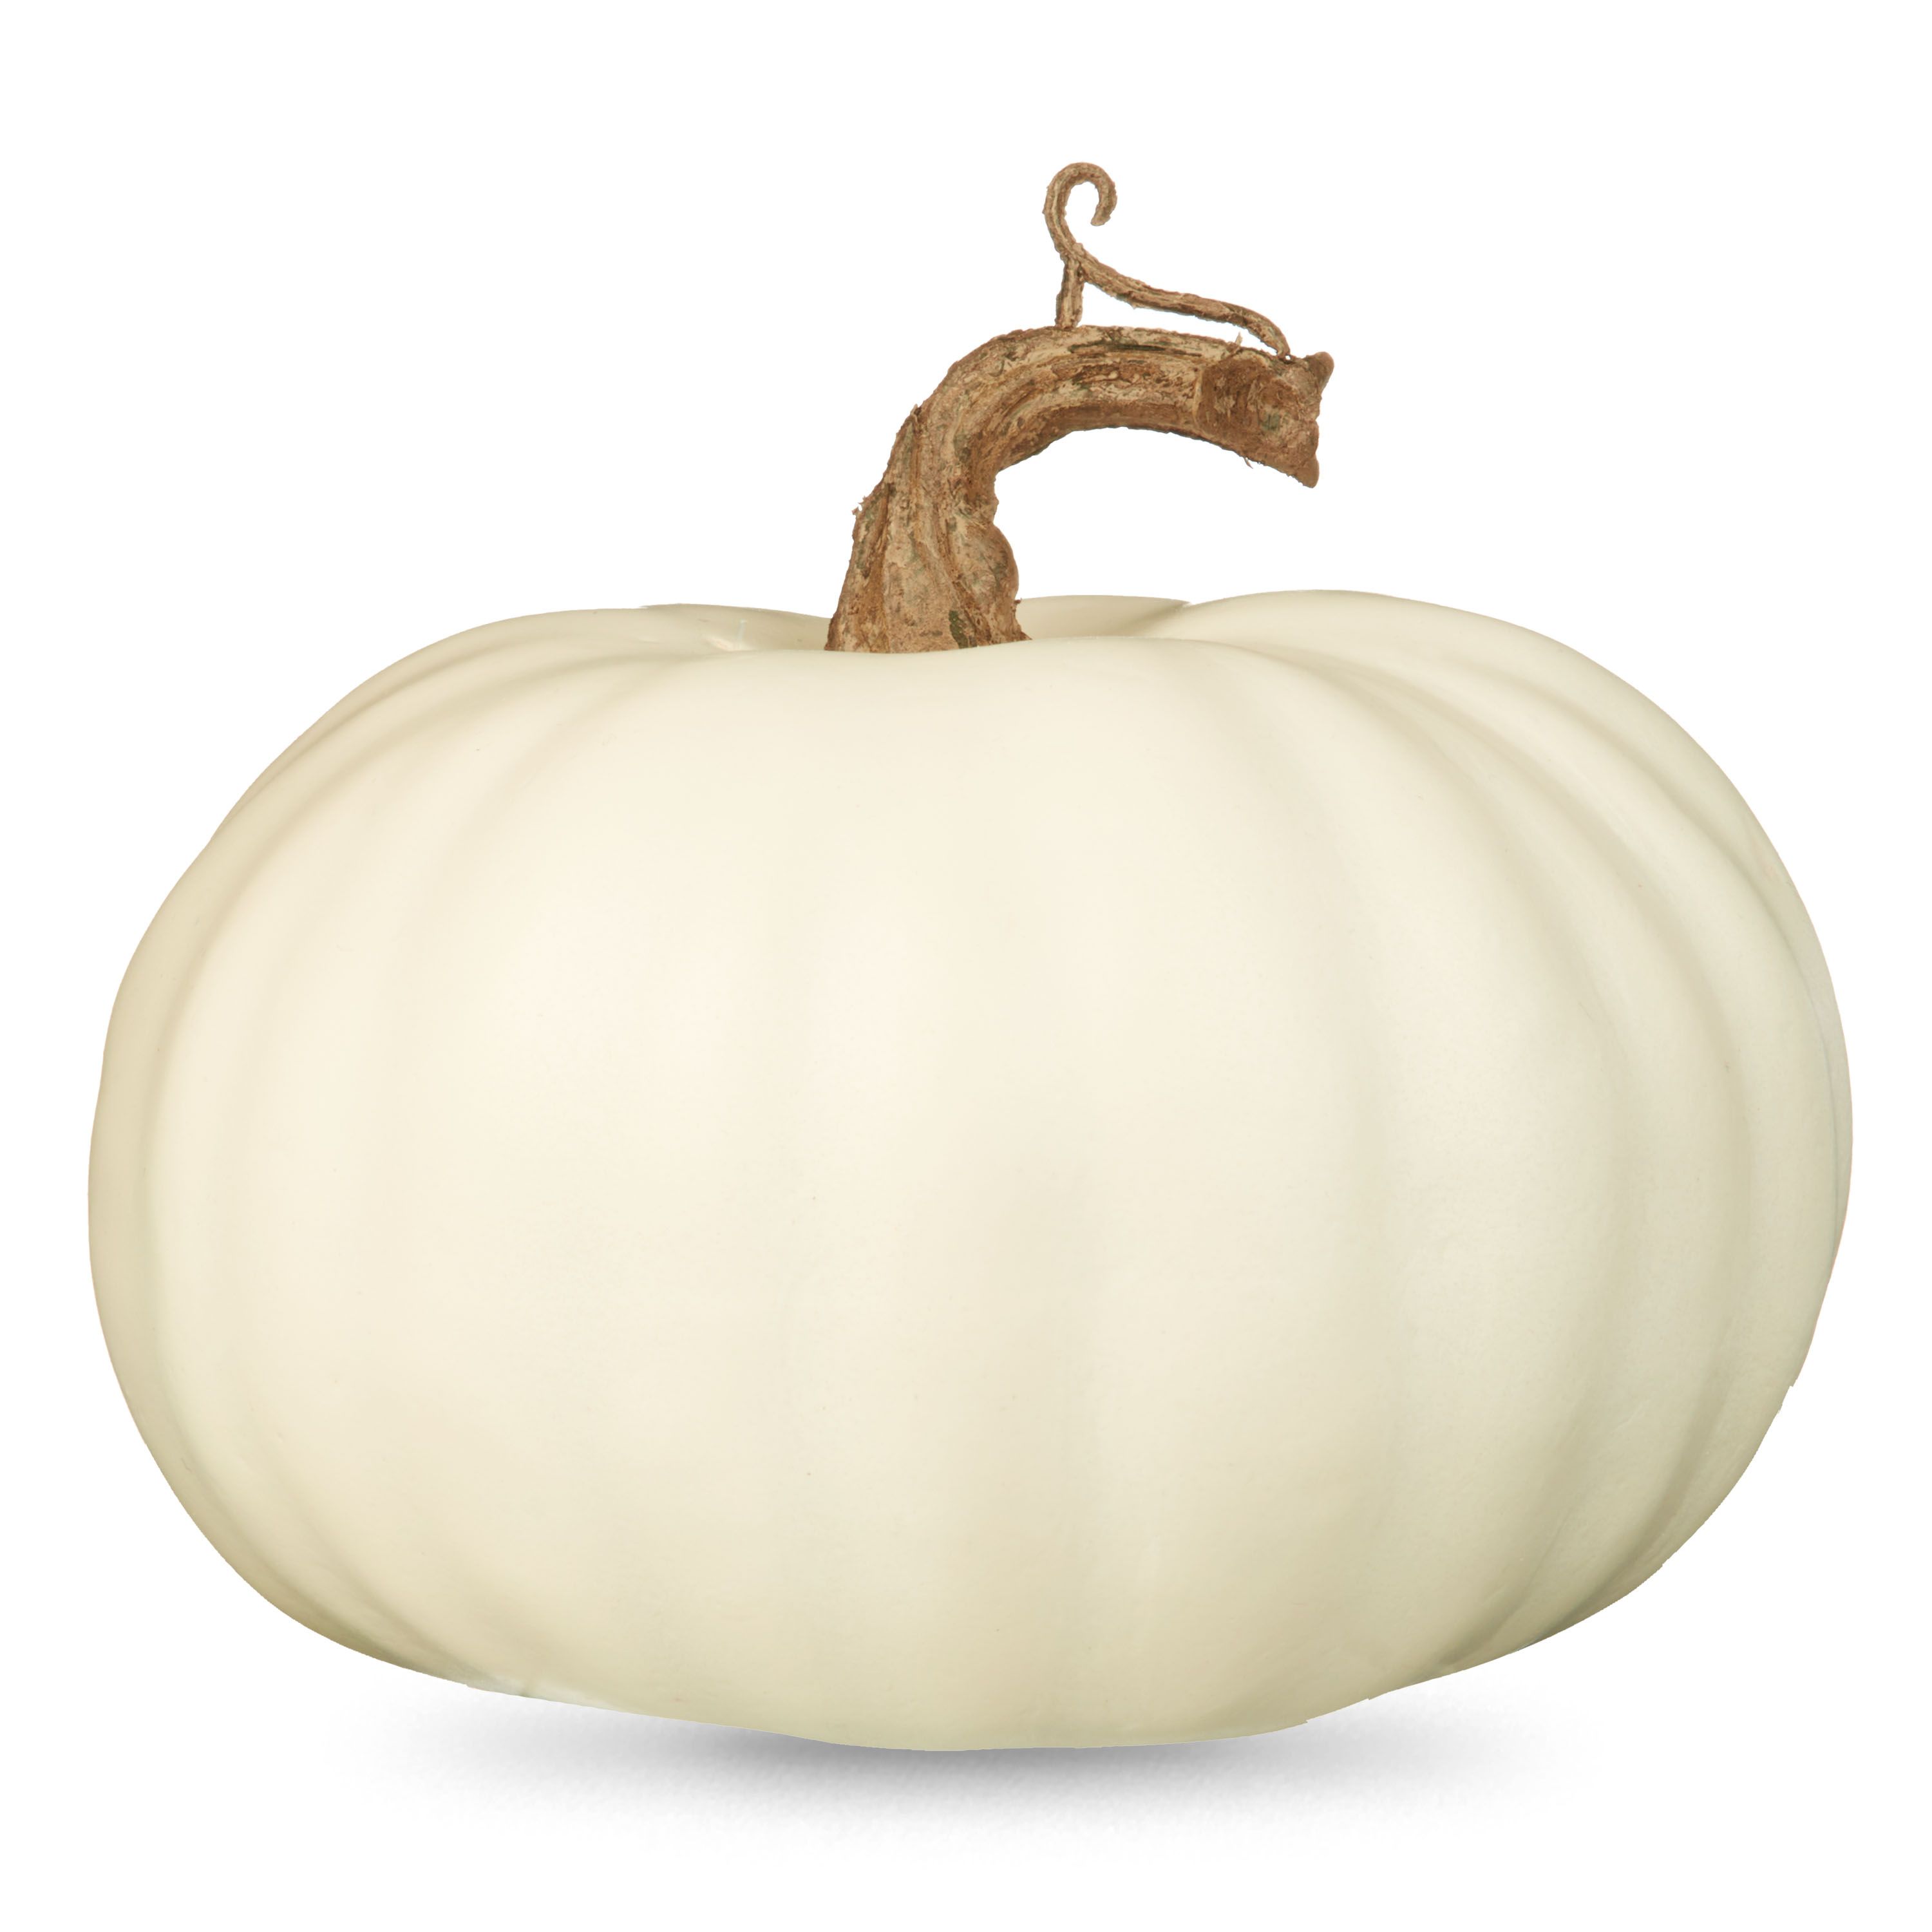 Way to Celebrate Harvest Short Natural Pumpkin Cream with Speckles 6” x 5” | Walmart (US)